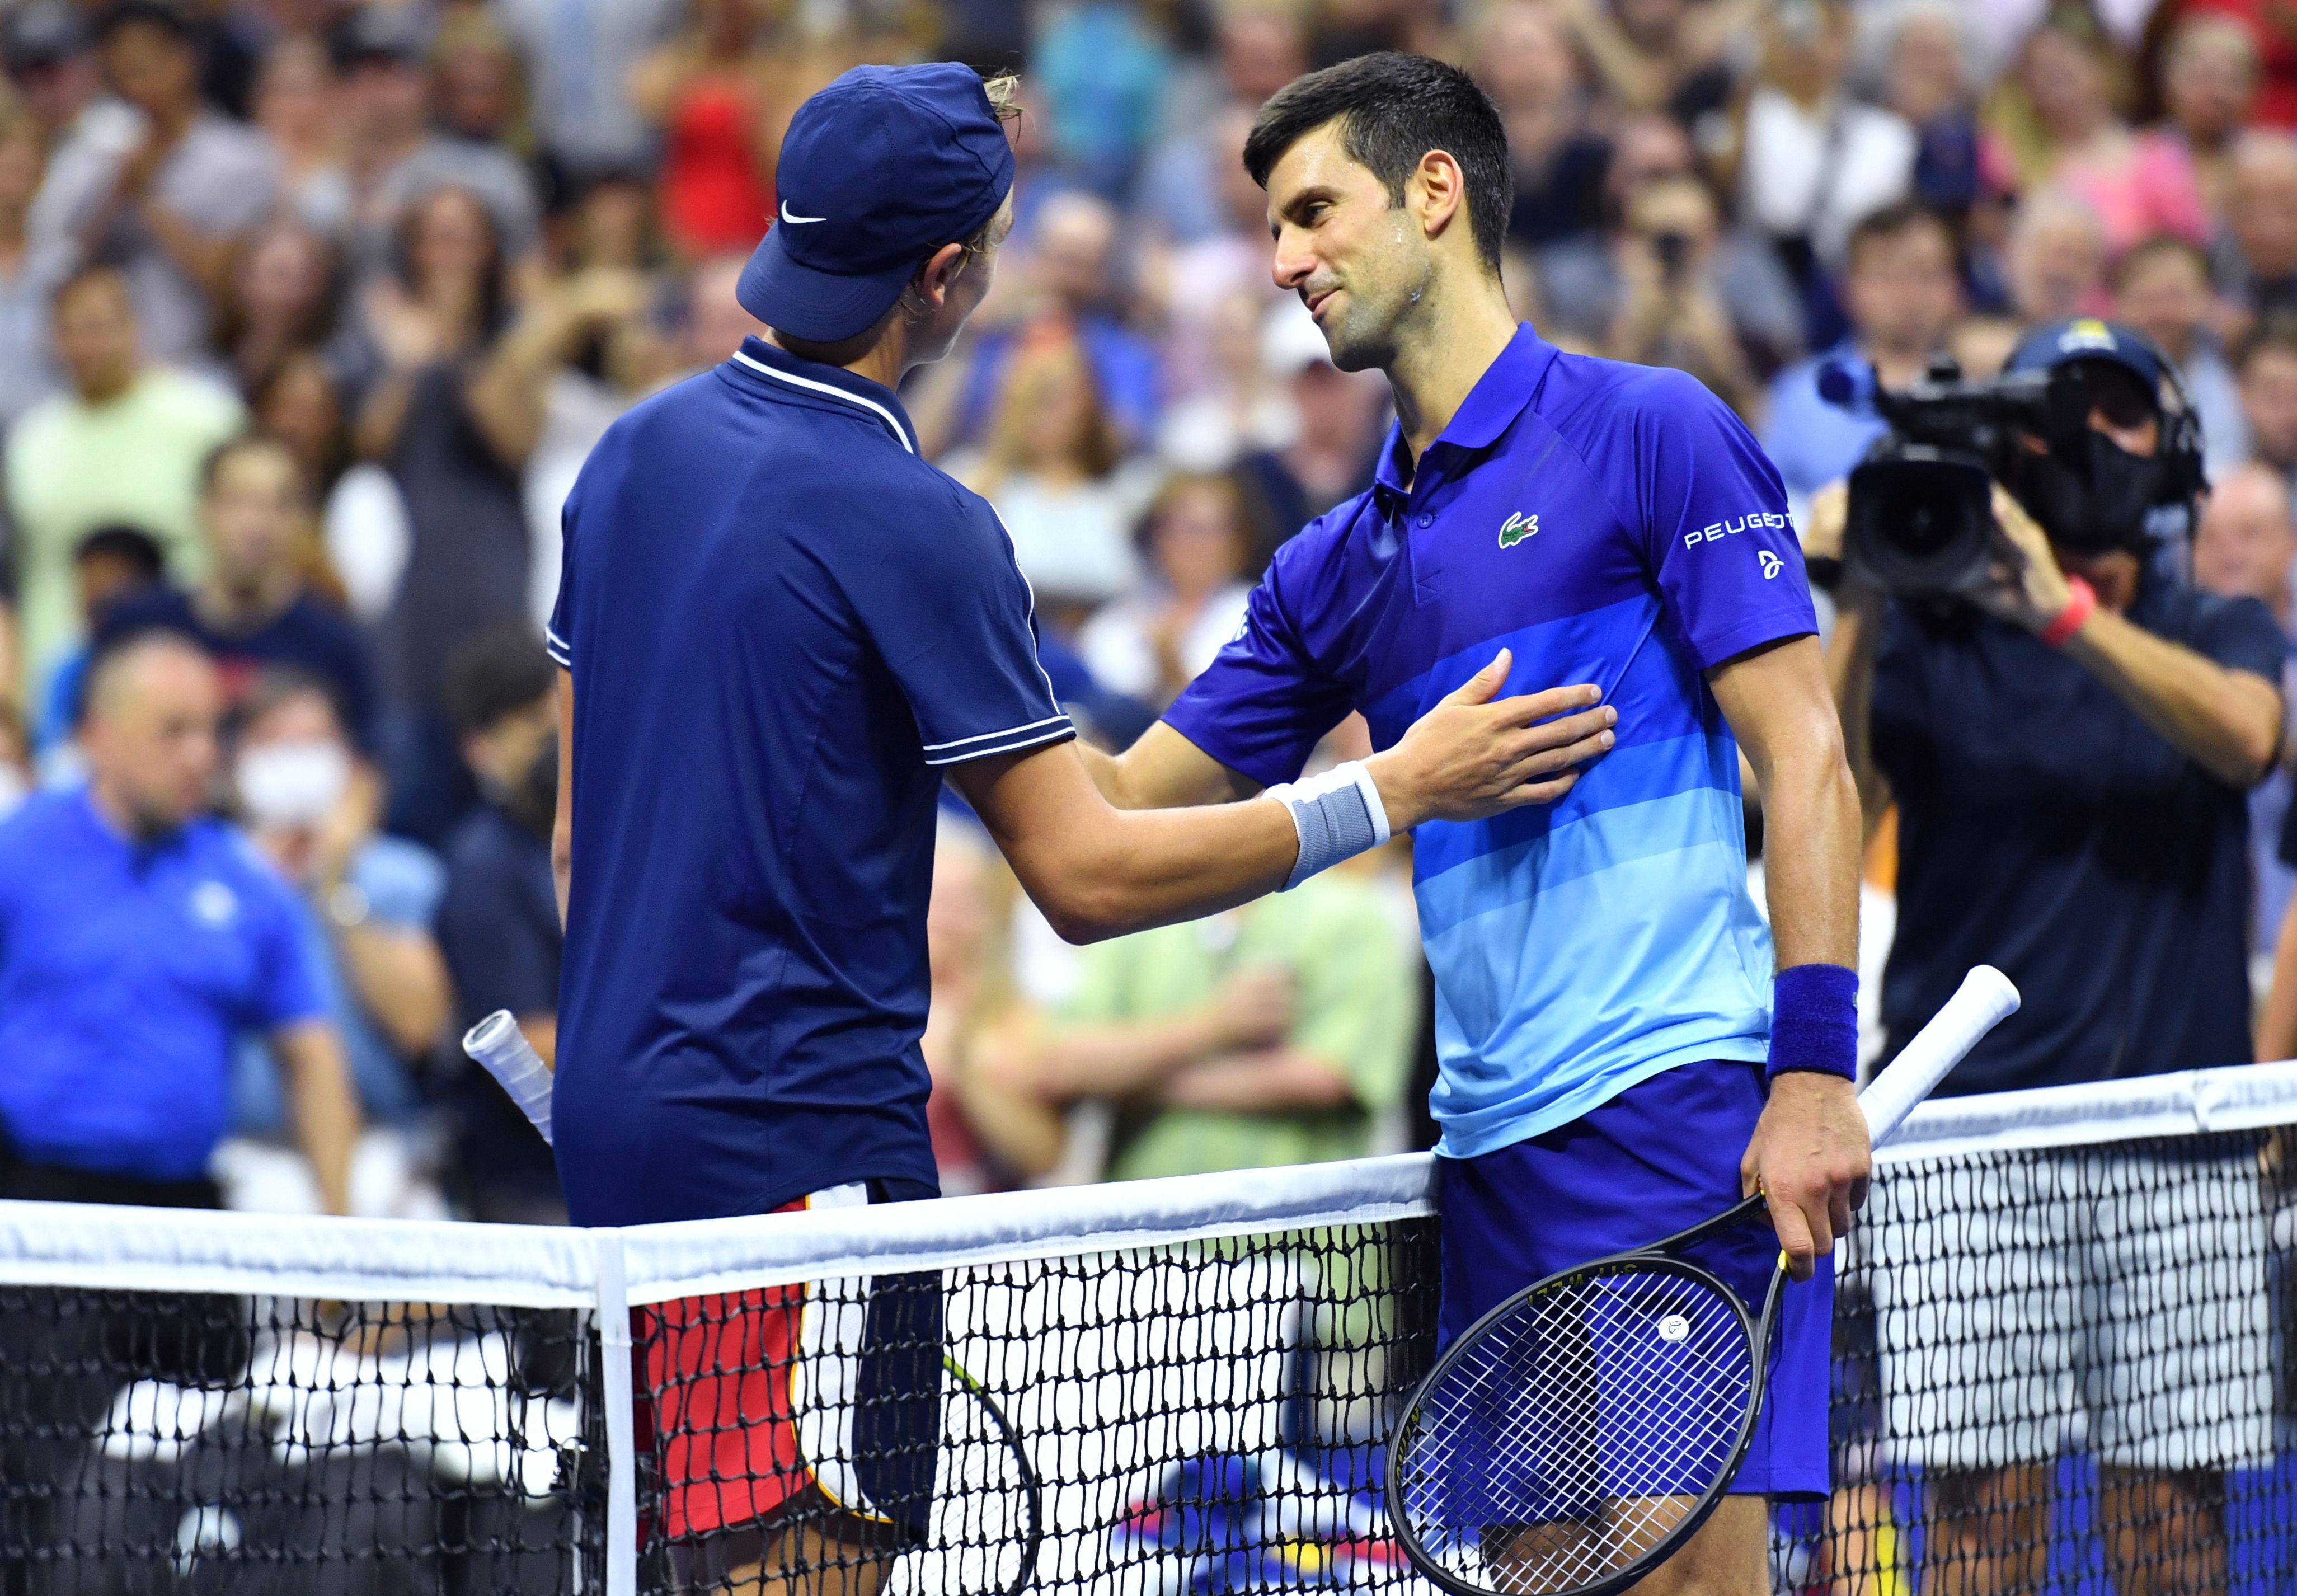 Novak Djokovic survives shaky second-set loss to beat Danish teen Holger Rune